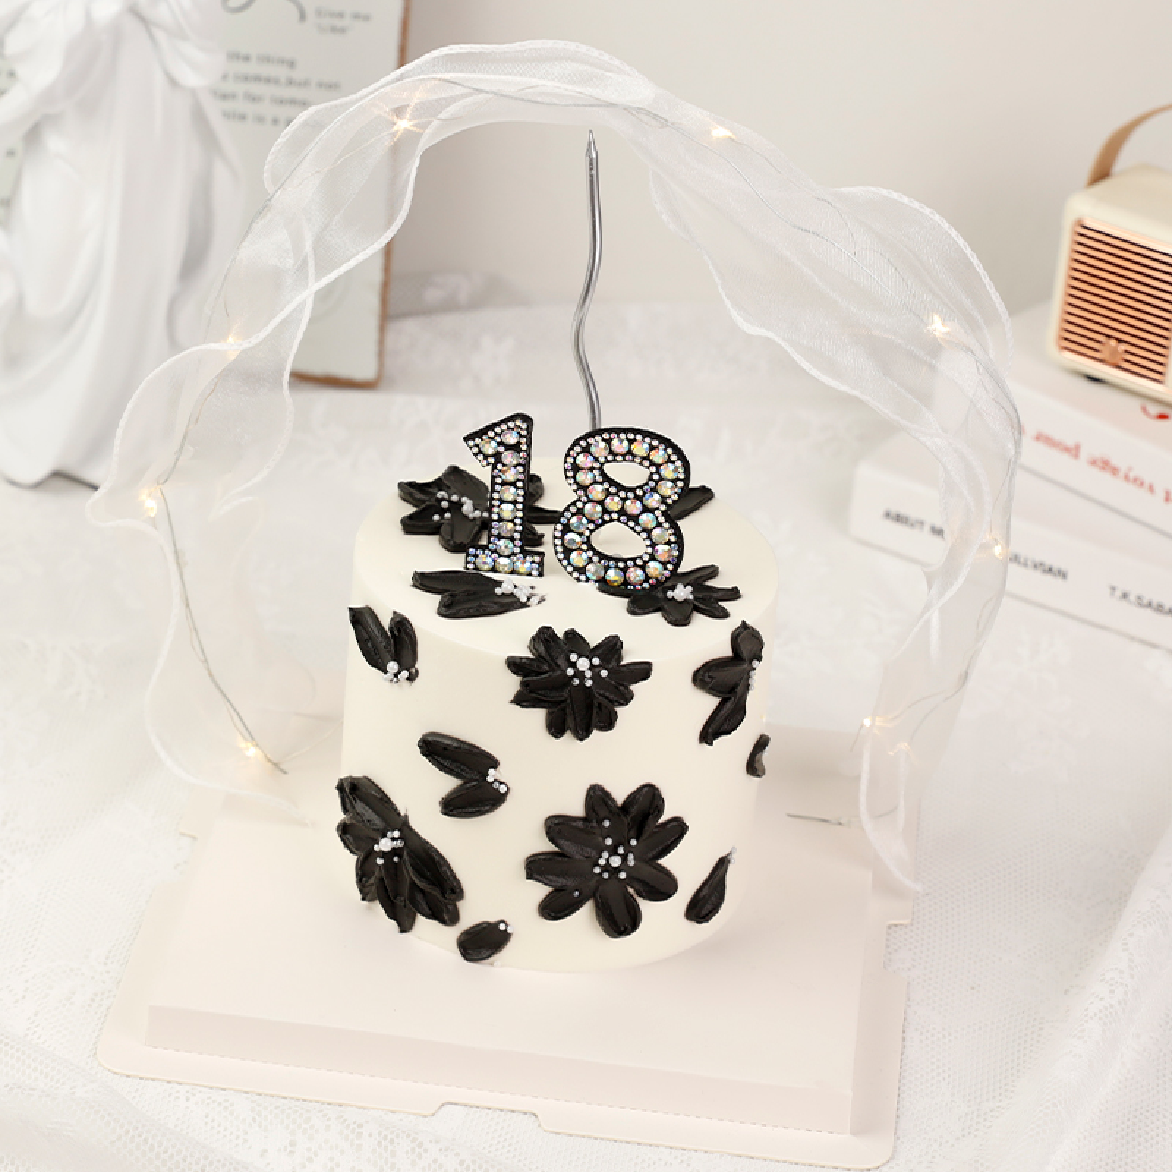 Cake Topper Cupcake Decoration - Decorative Black & Diamond - Number 6